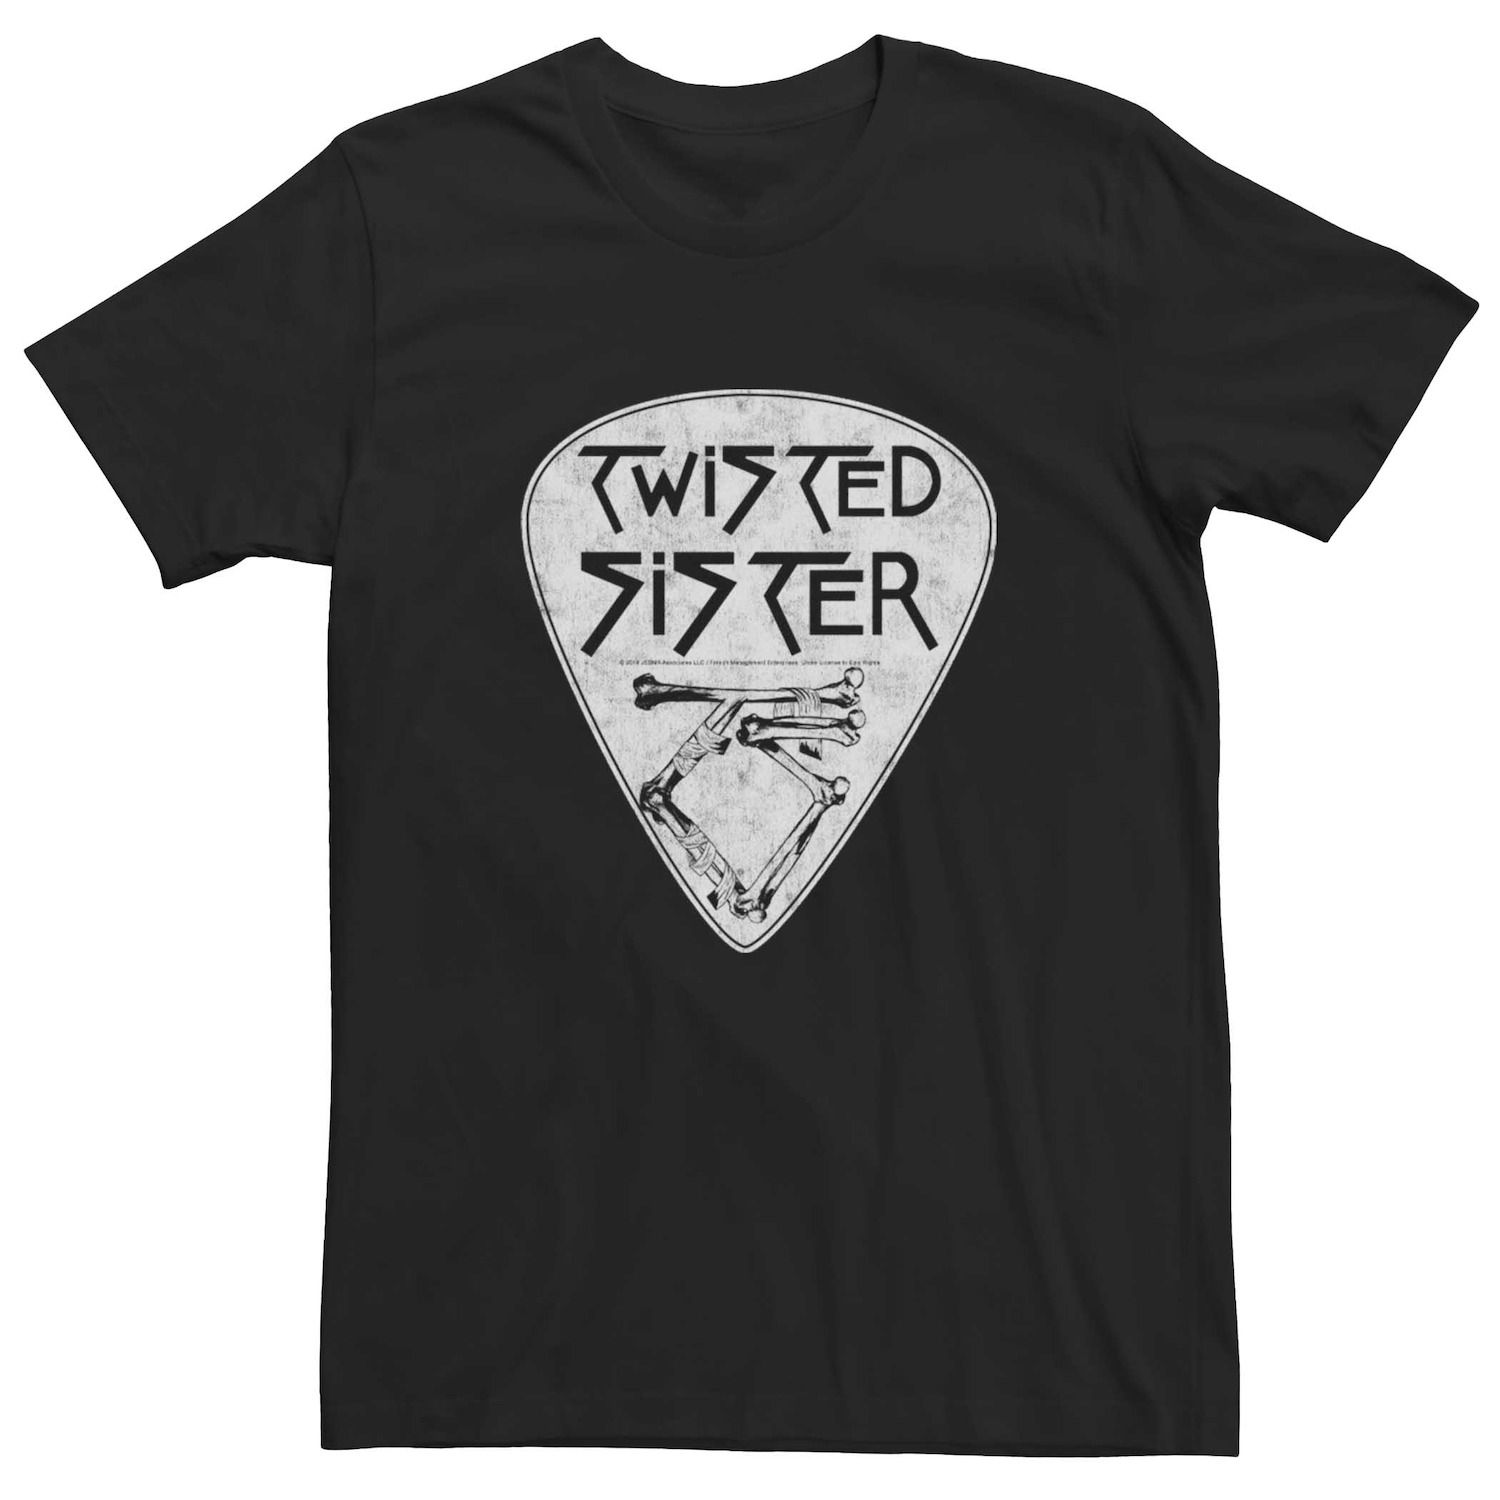 Мужская футболка с логотипом Twisted Sister Guitar Pick Licensed Character мужская худи с графическим логотипом twisted sister you can t stop rock n roll licensed character